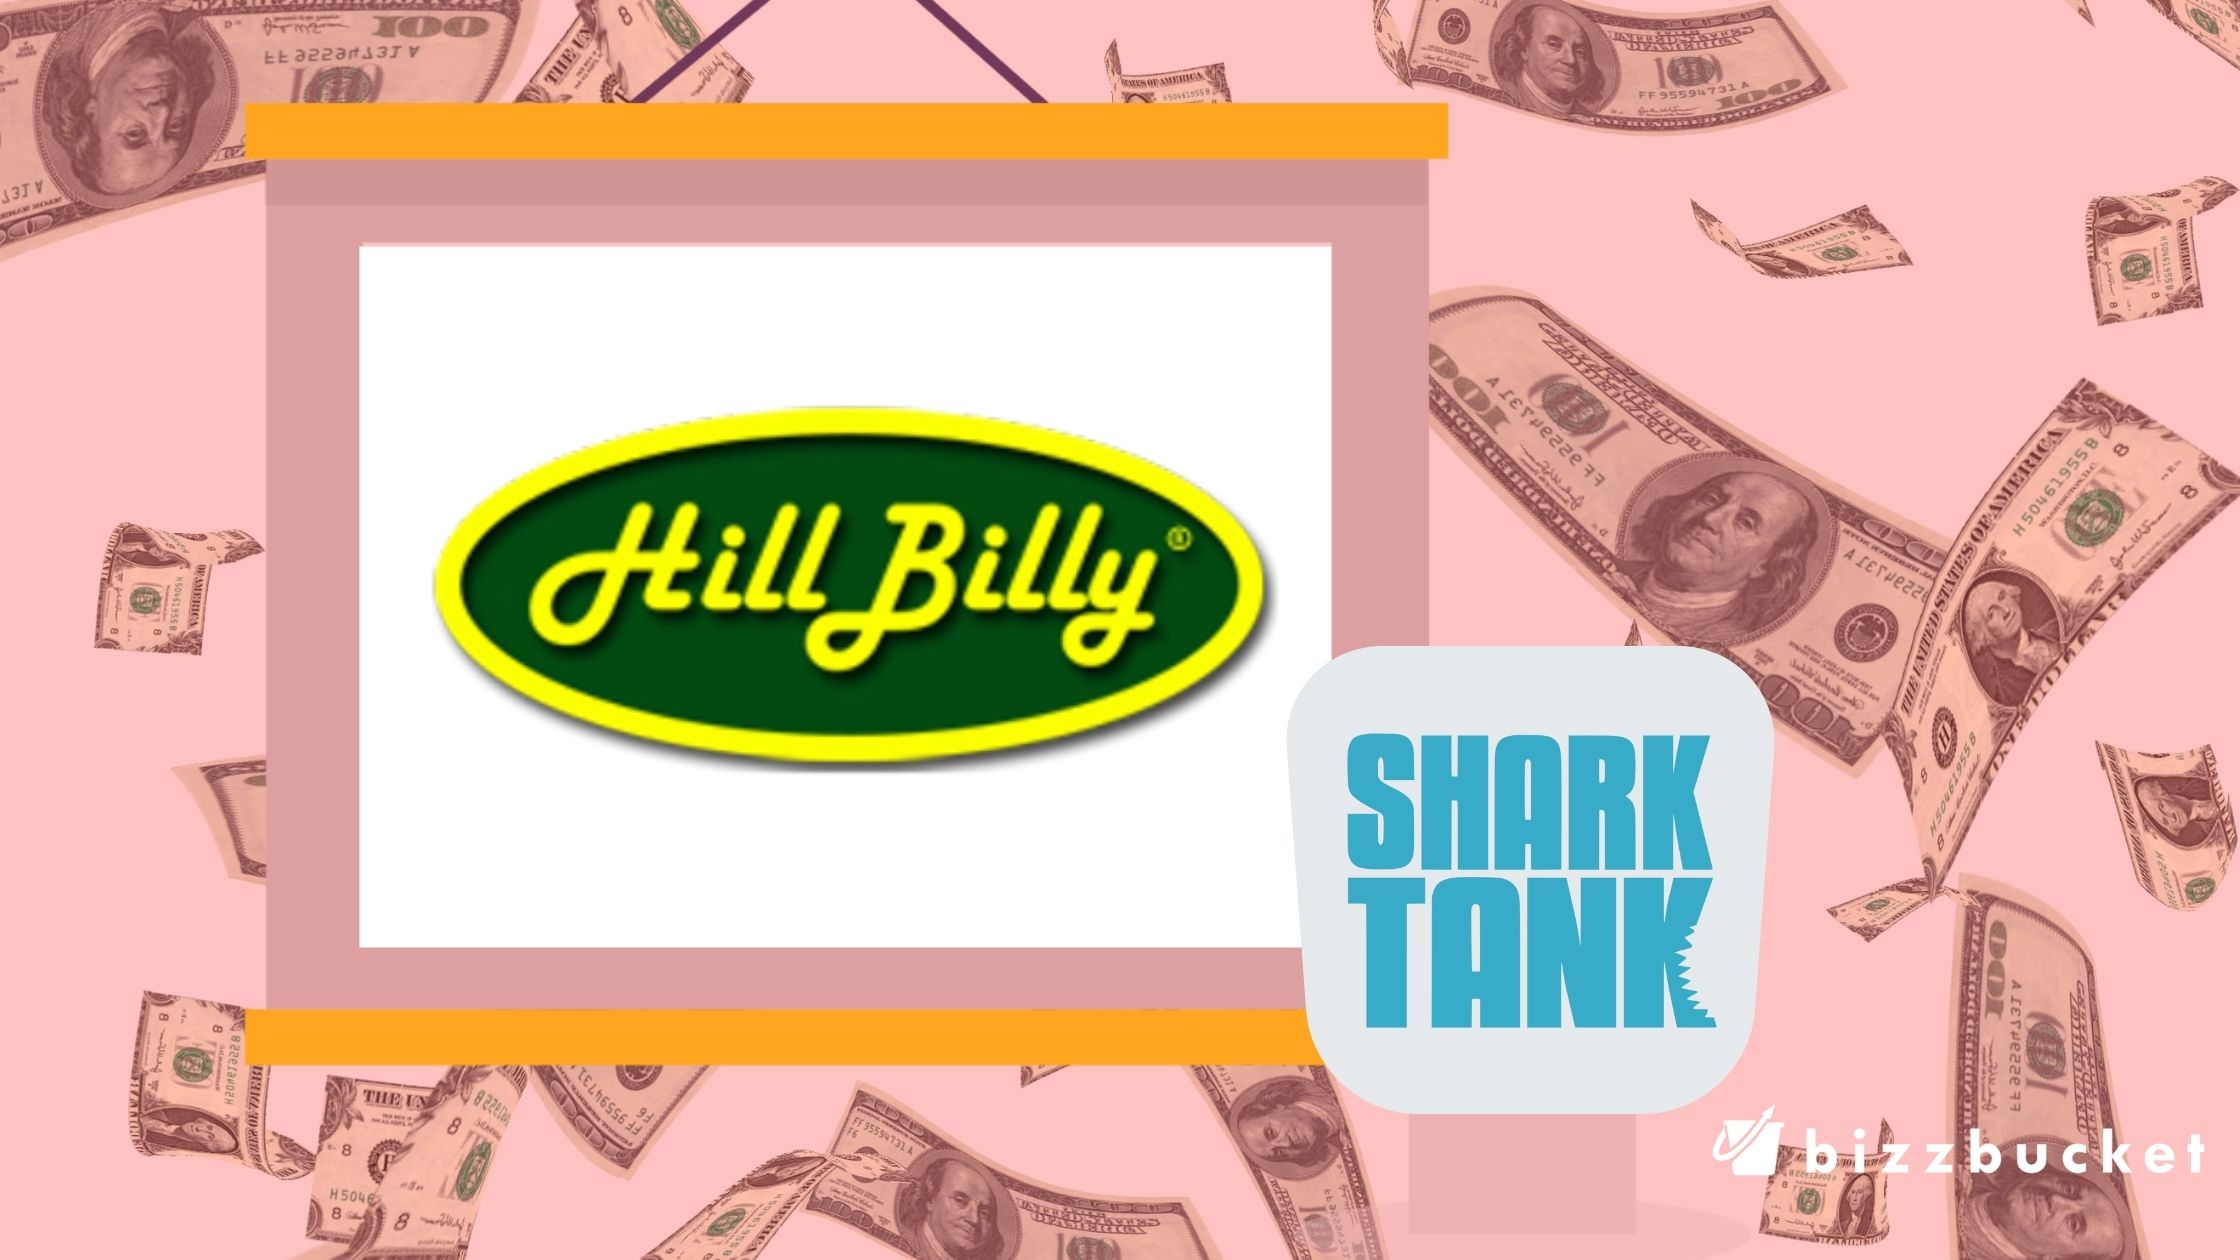 Hillbilly shark tank update